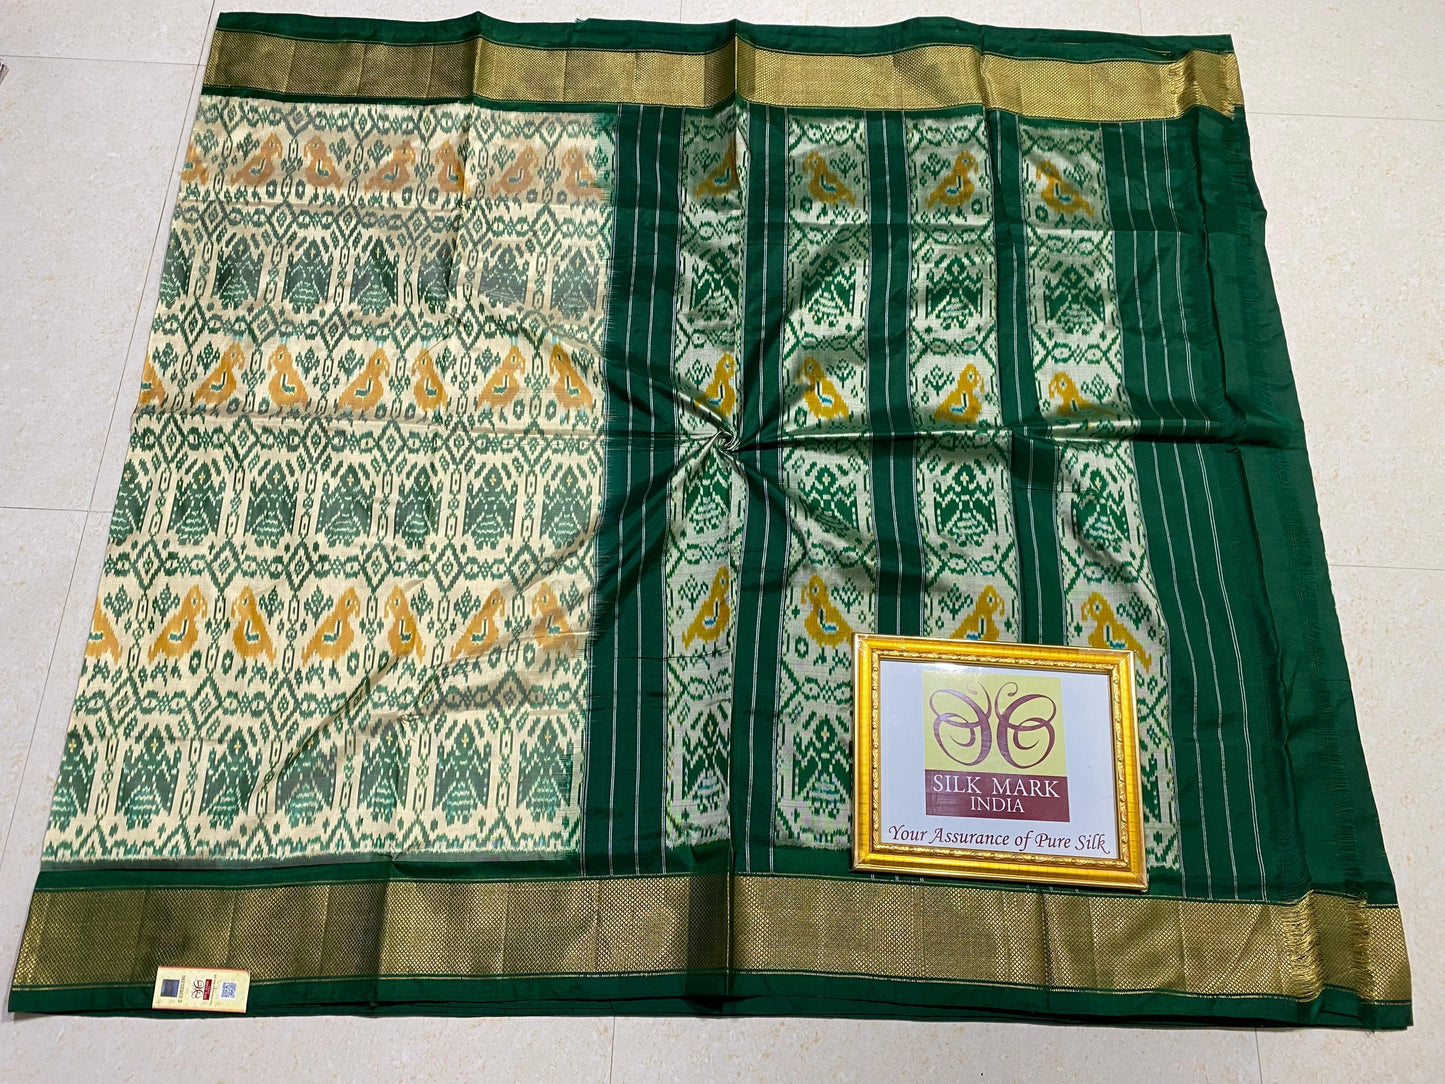 Double weaved kaddi border pattu sarees